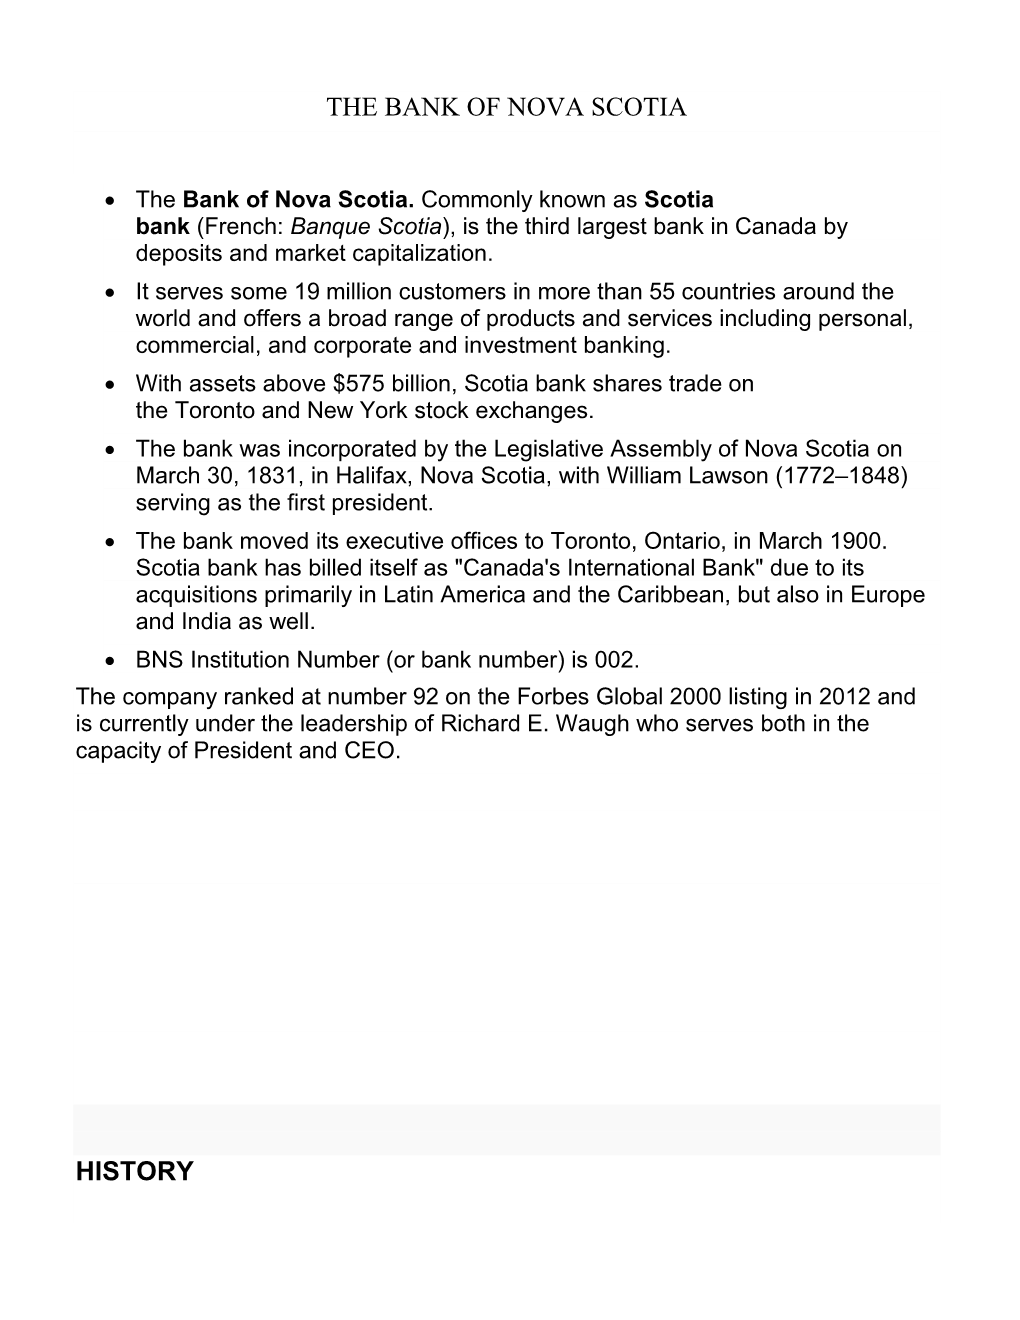 The Bank of Nova Scotia History Address